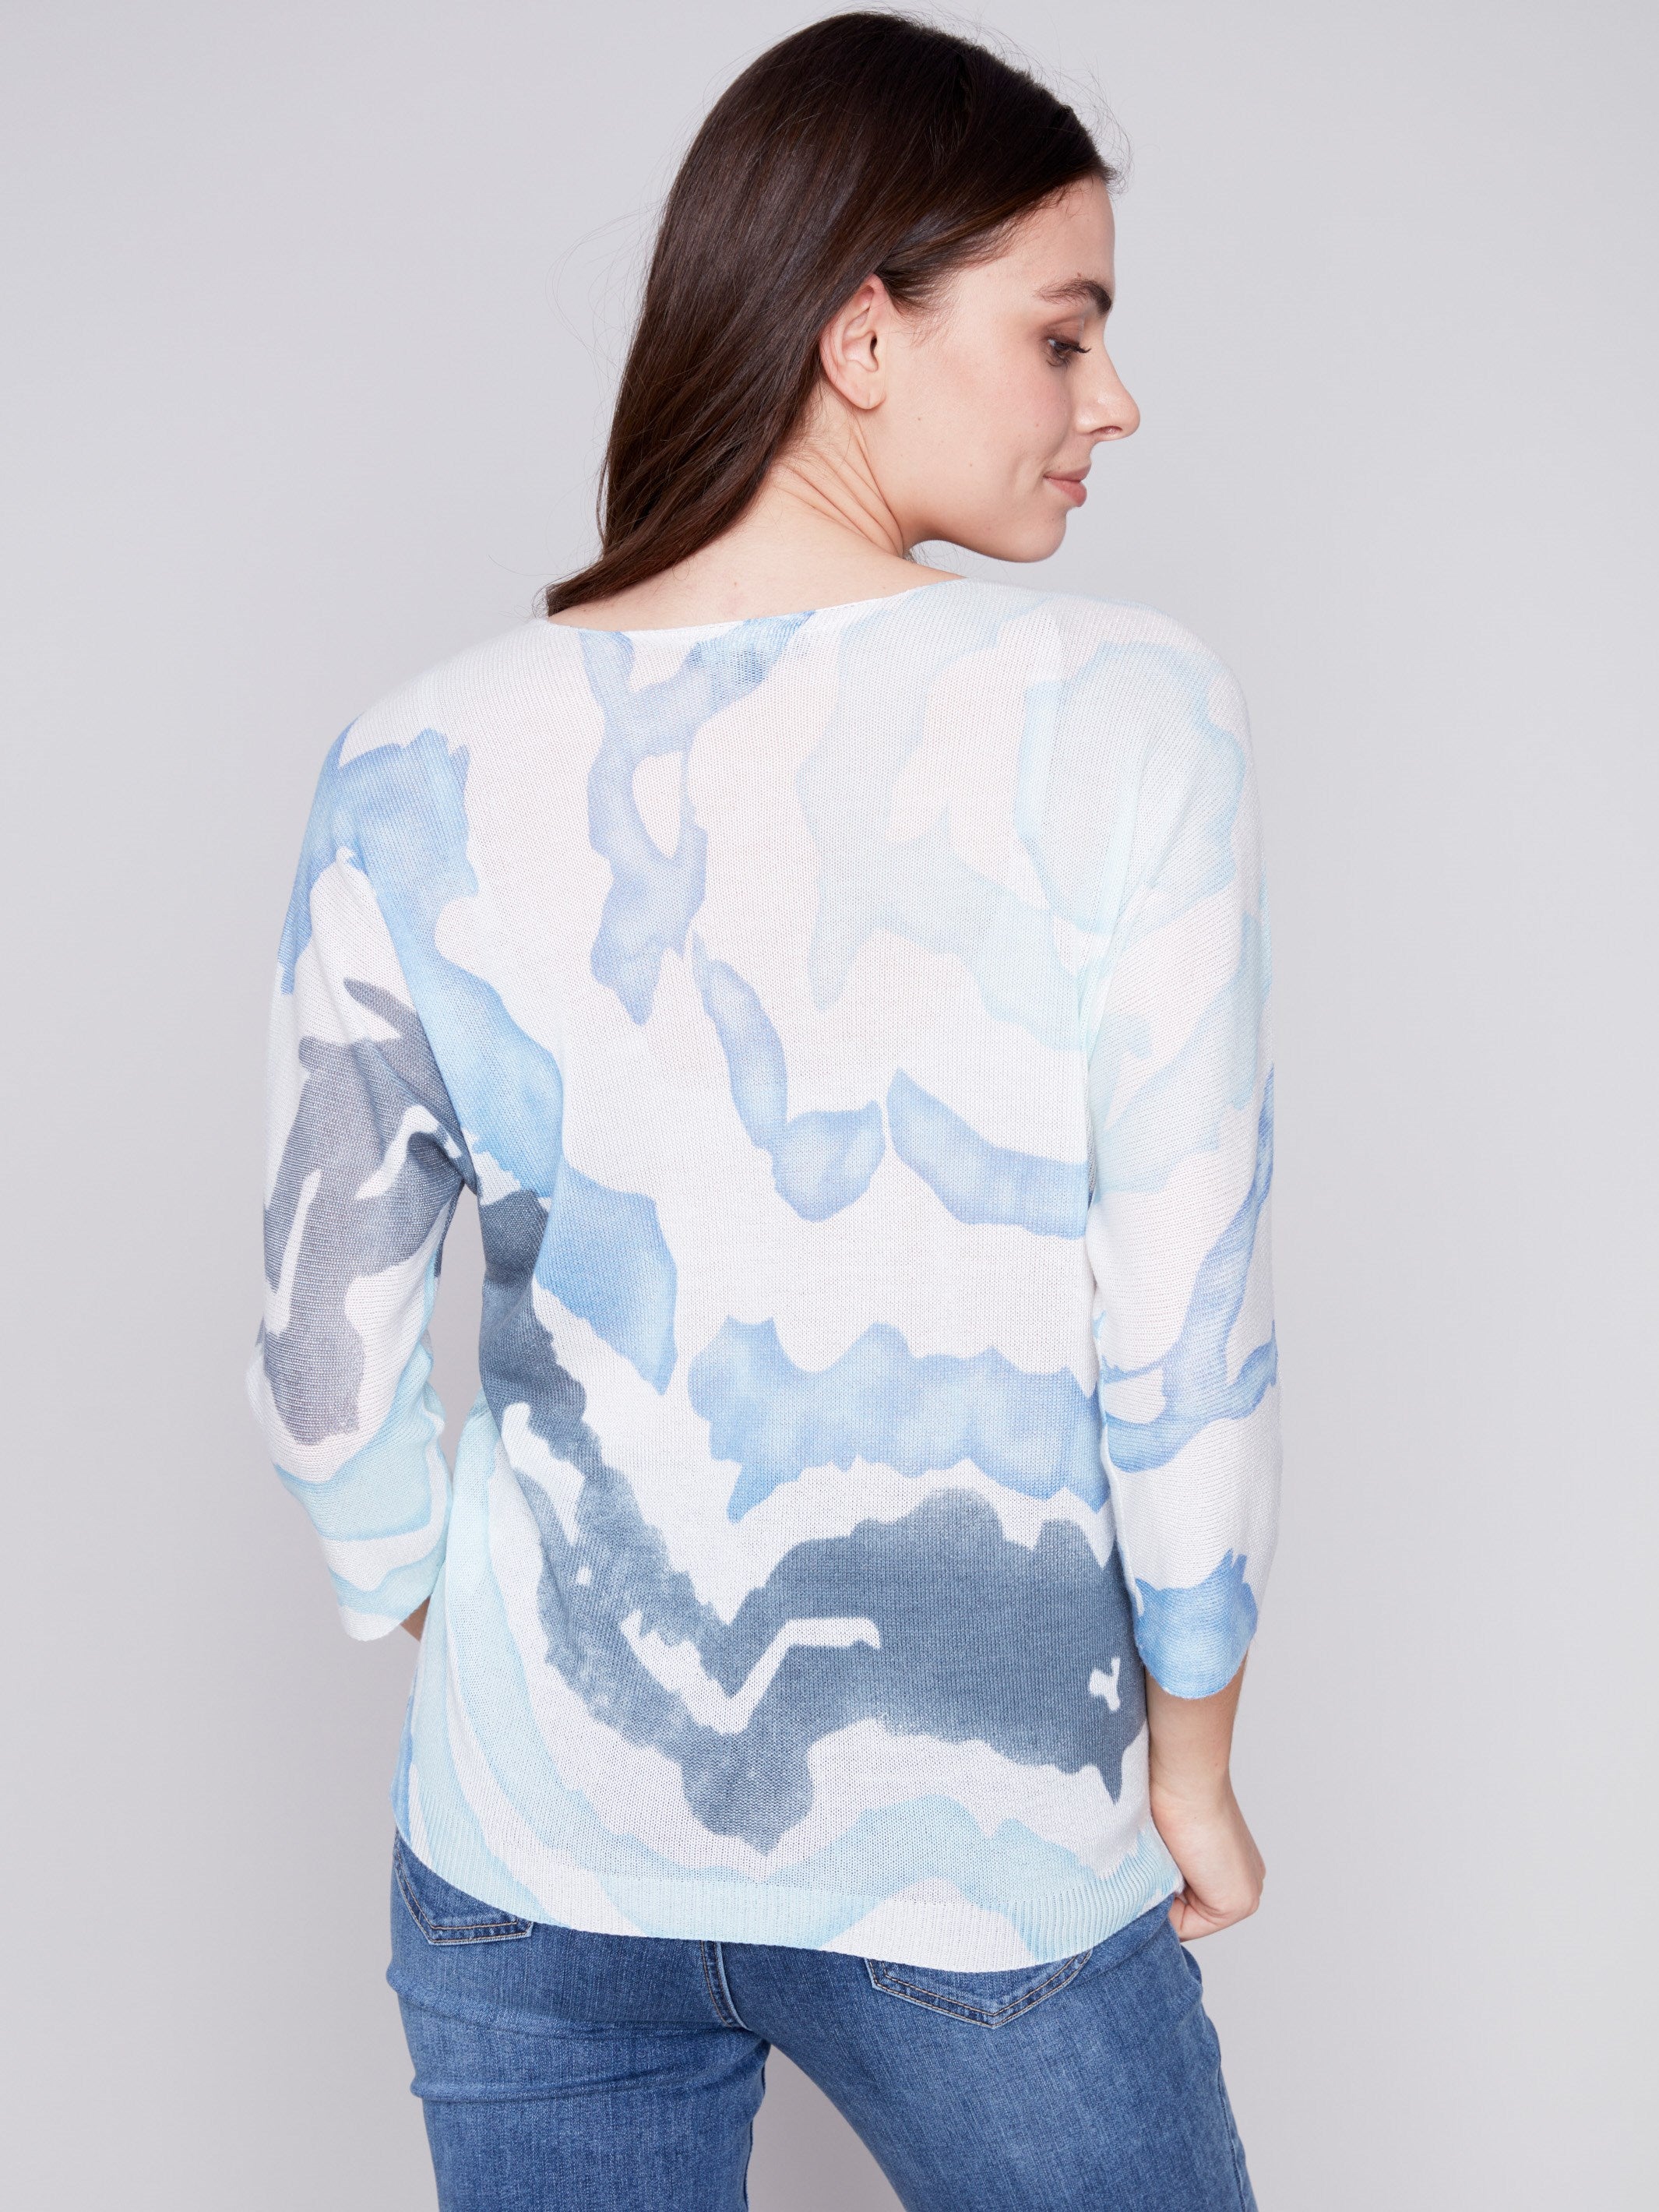 Printed Dolman Sweater - Indigo - Charlie B Collection Canada - Image 2